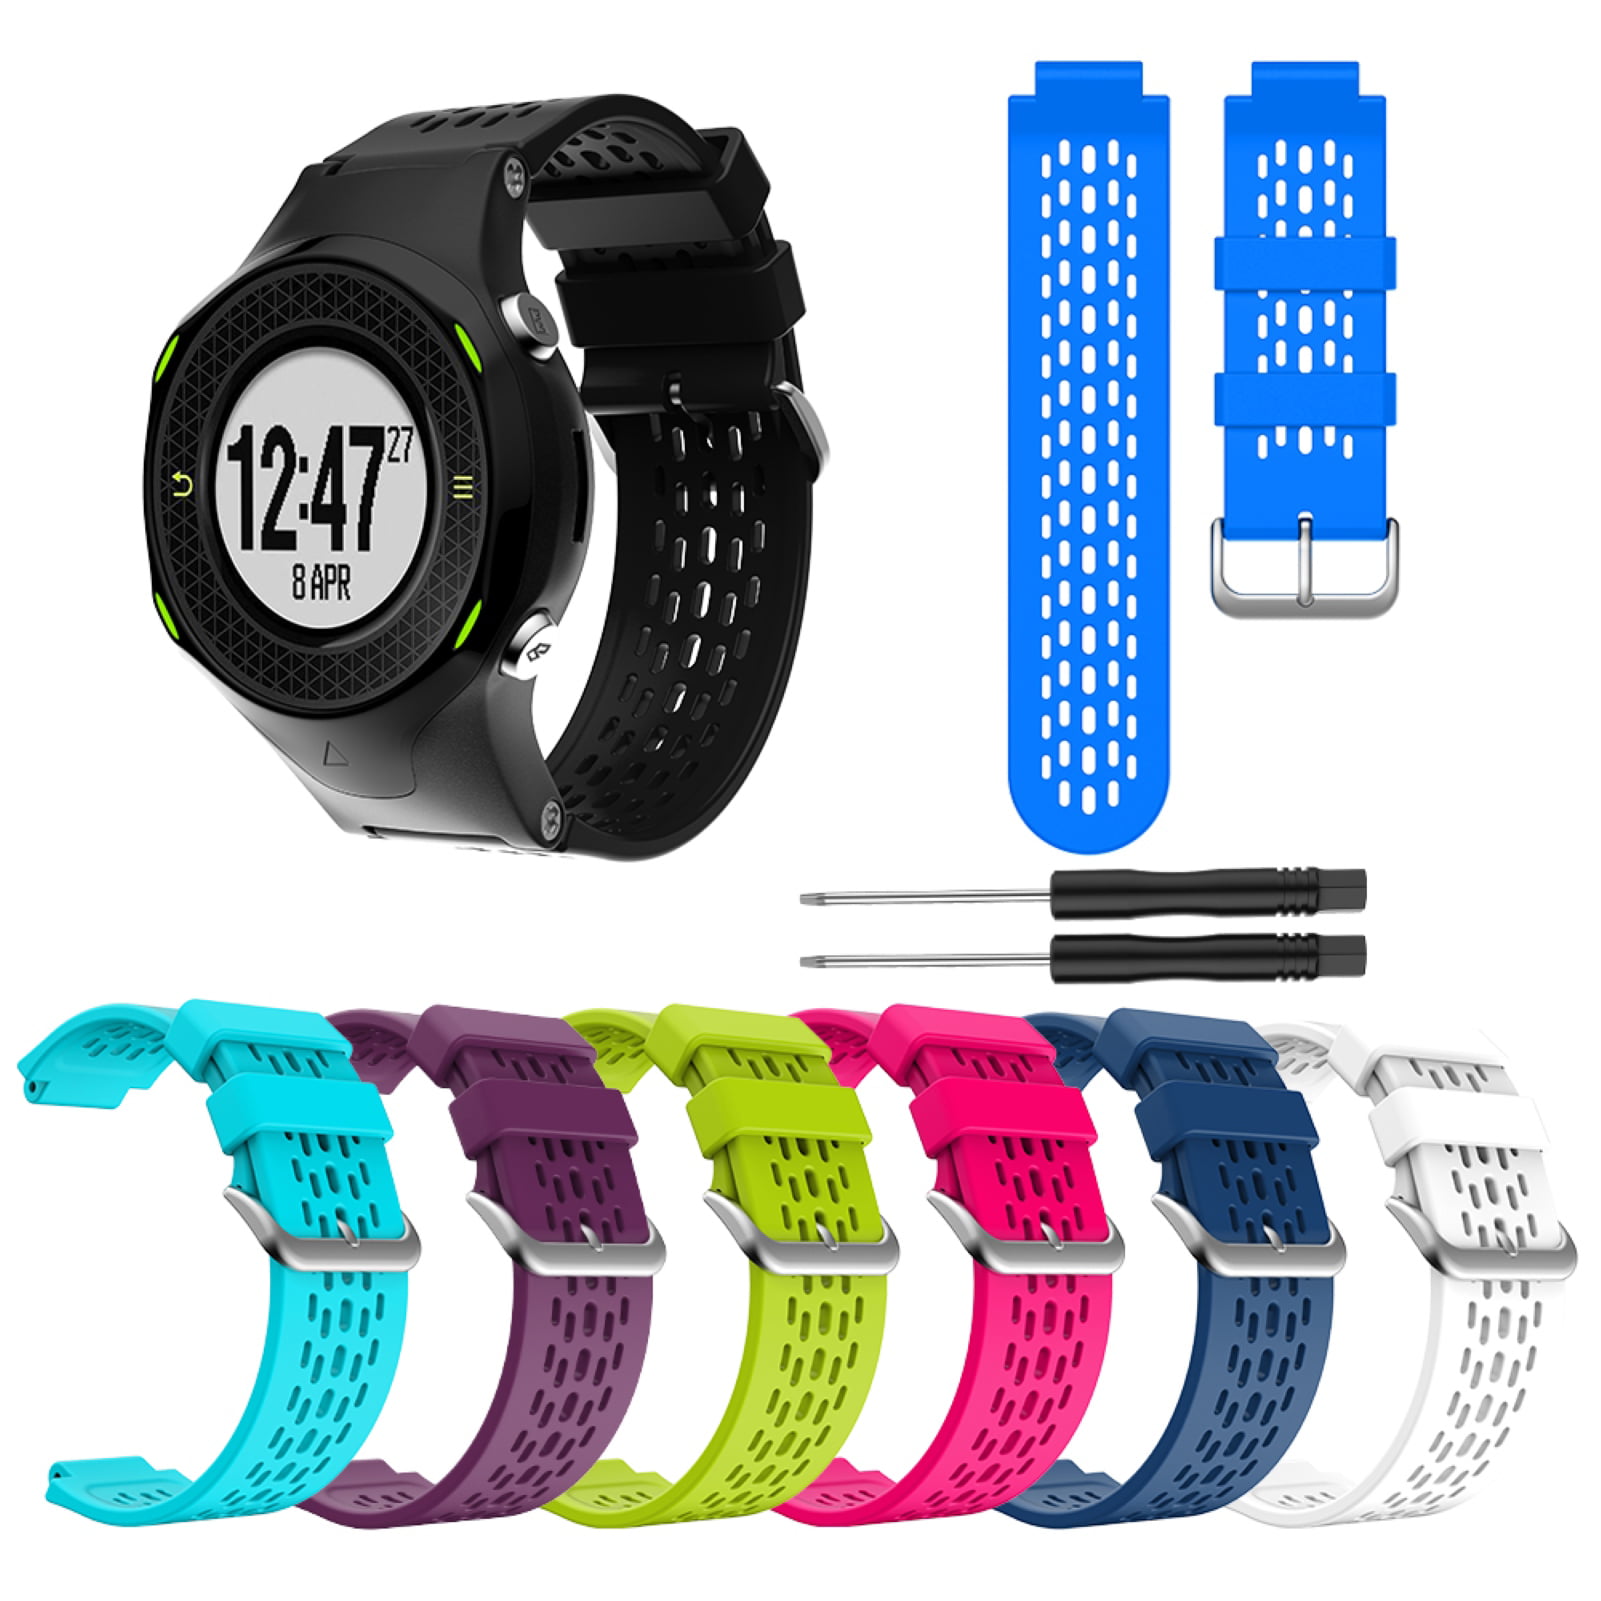 albue Mig fast xinRui Breathable Wear-resistant Smart Watch Bracelet Strap for Garmin  Approach S4/S2 - Walmart.com